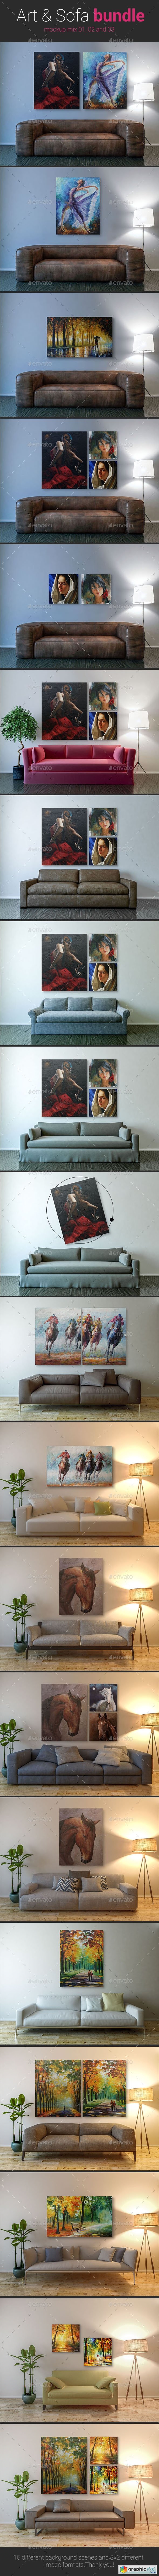 Art & Sofa Bundle